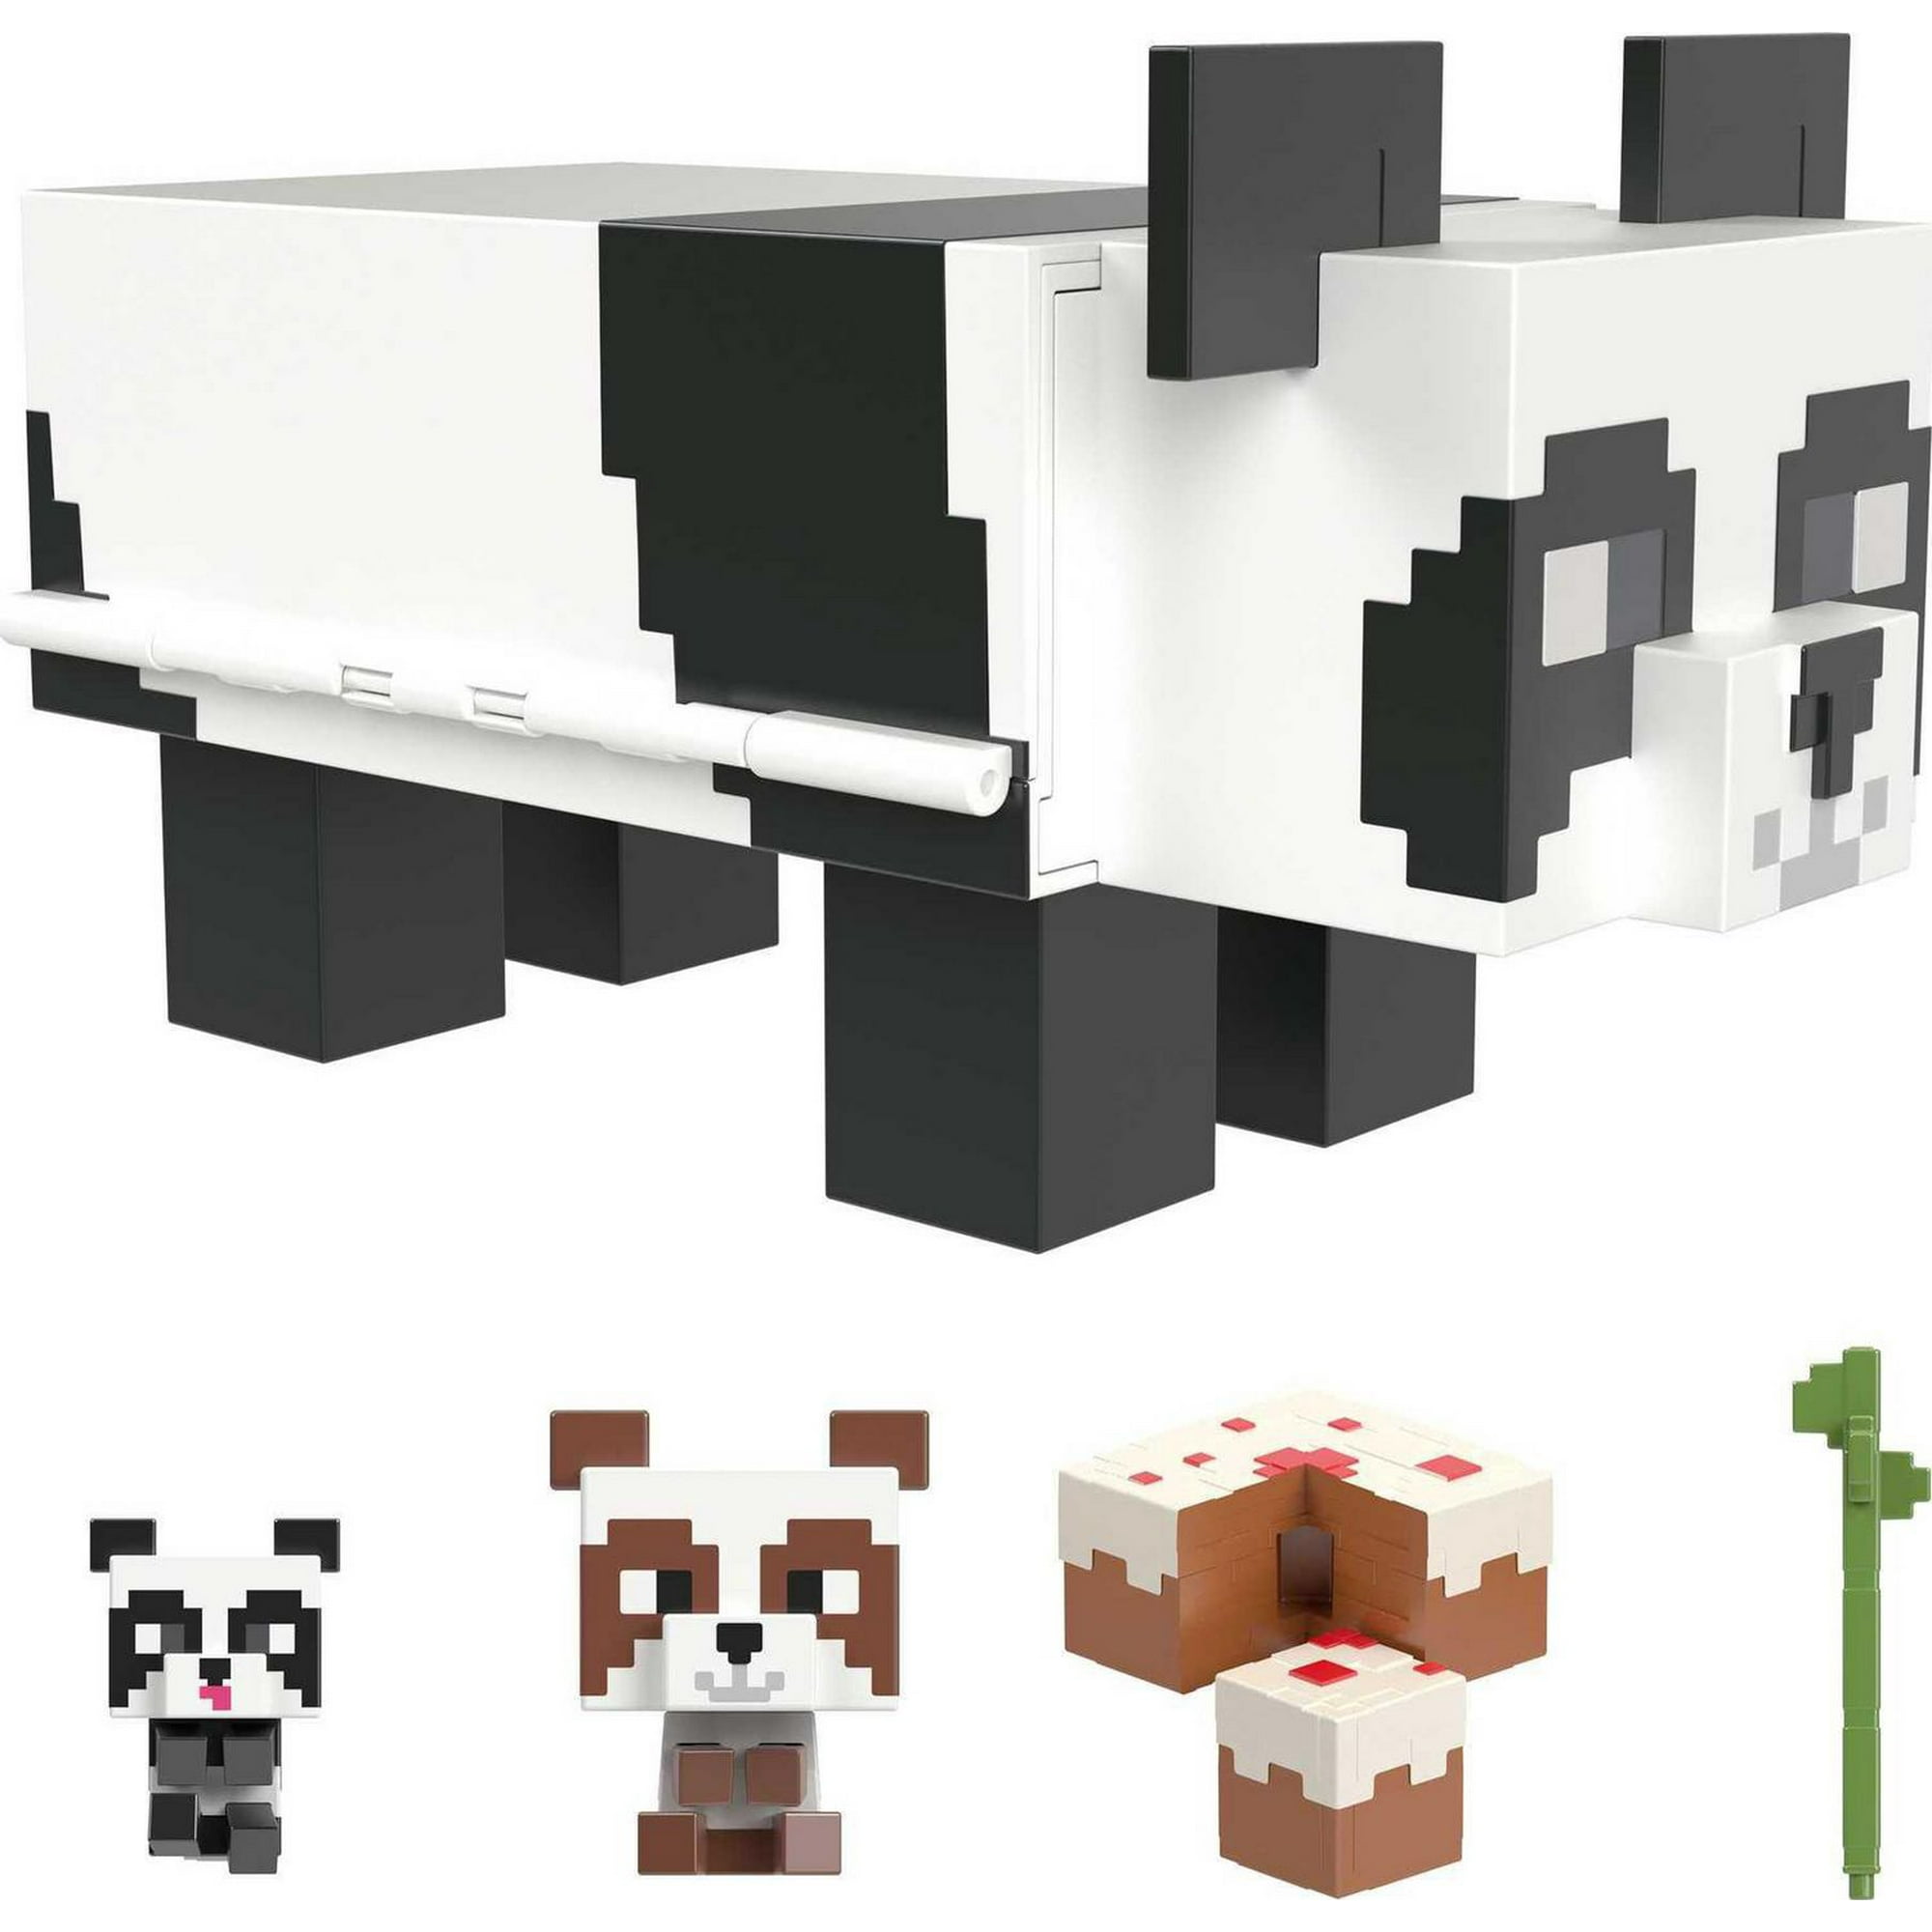 OOLY Playful Panda Stickers Set of 2 Sheets – Black Wagon Kids